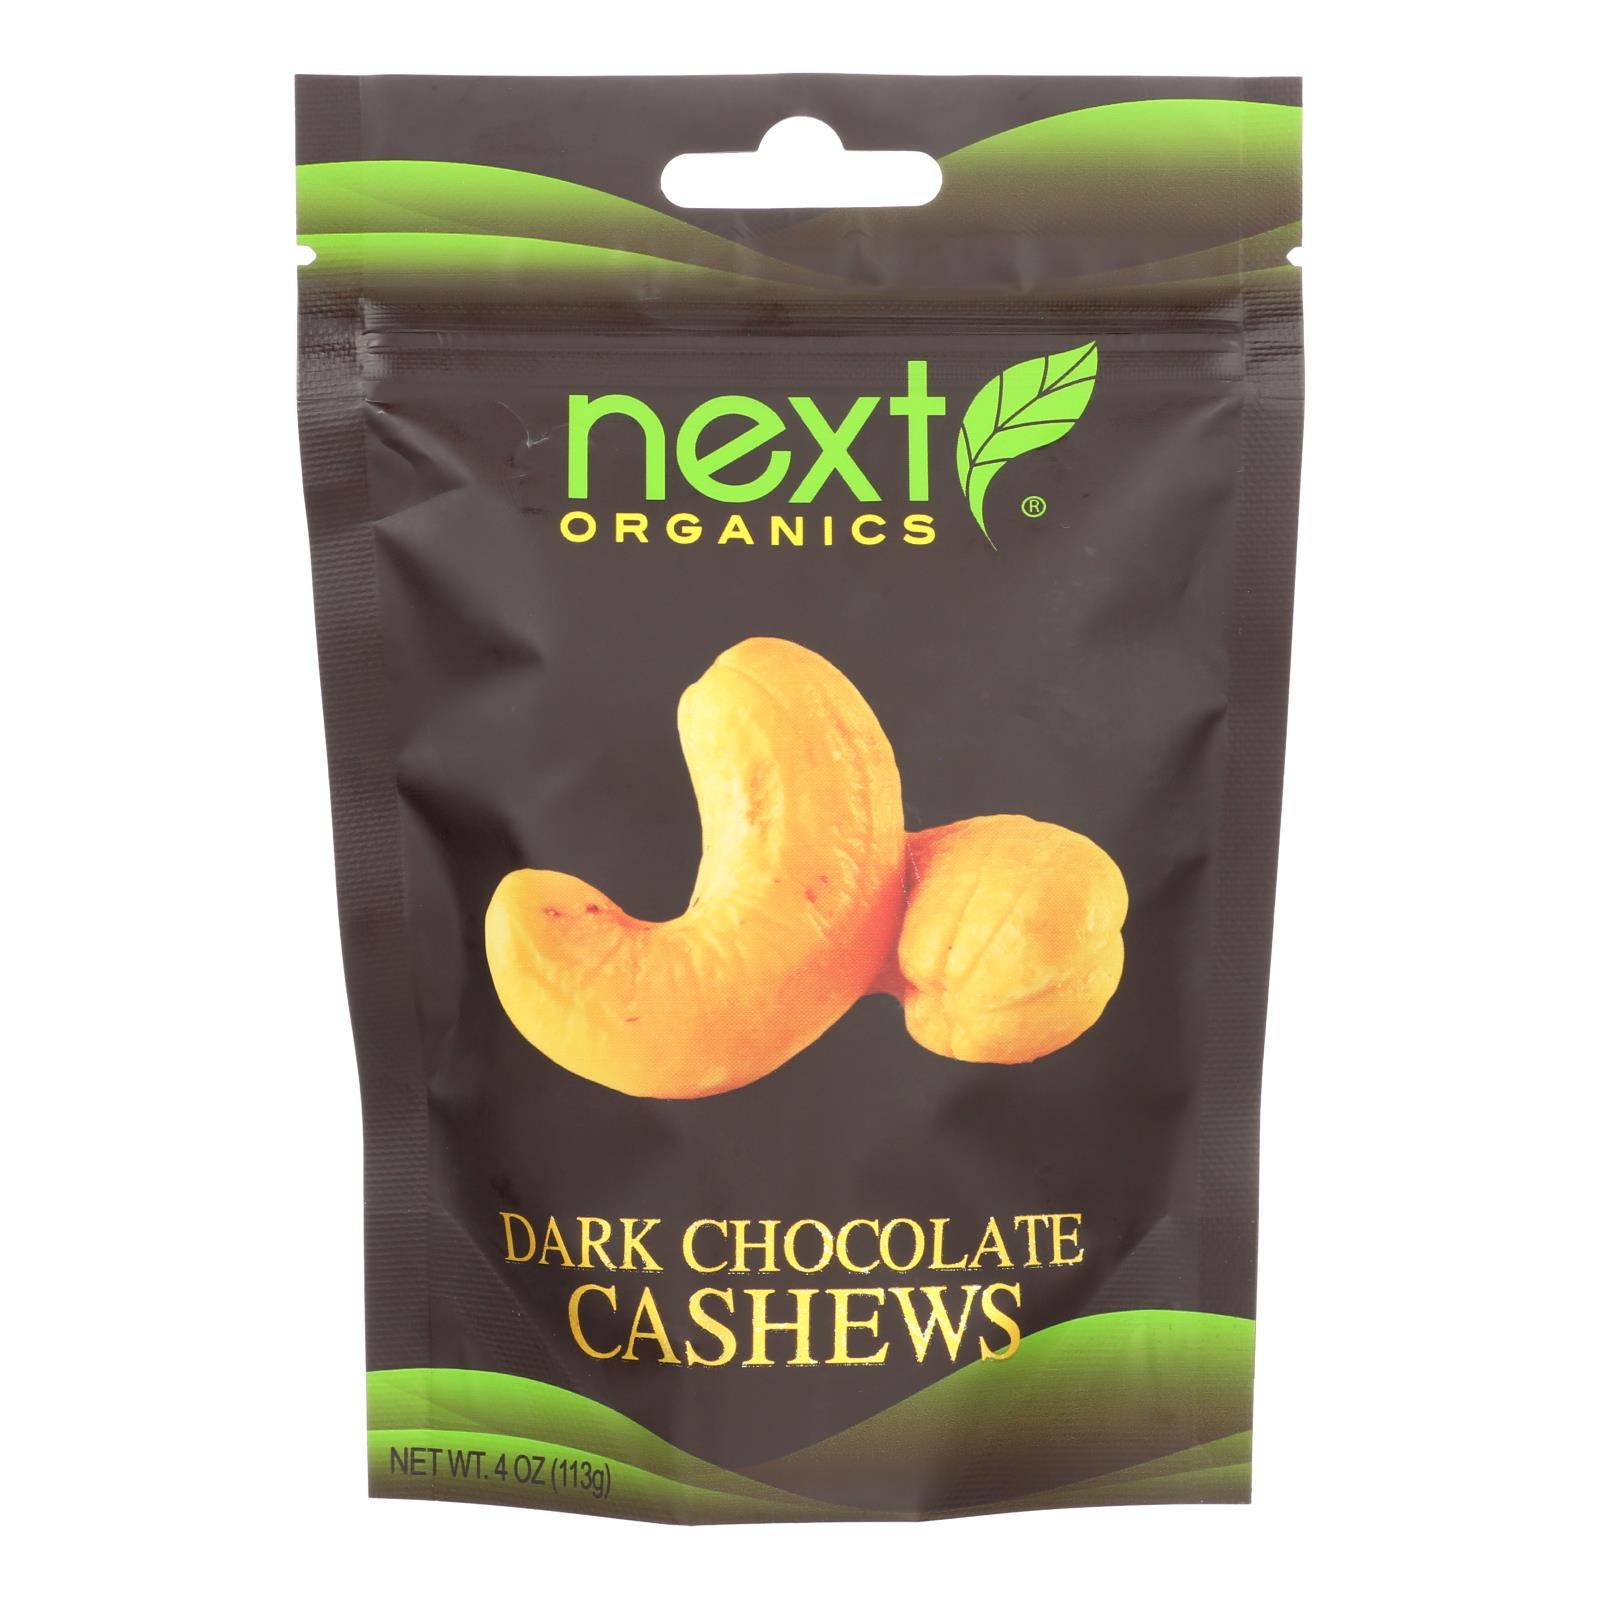 Next Organics Cashews, Dark Chocolate  - Case of 6 - 4 OZ